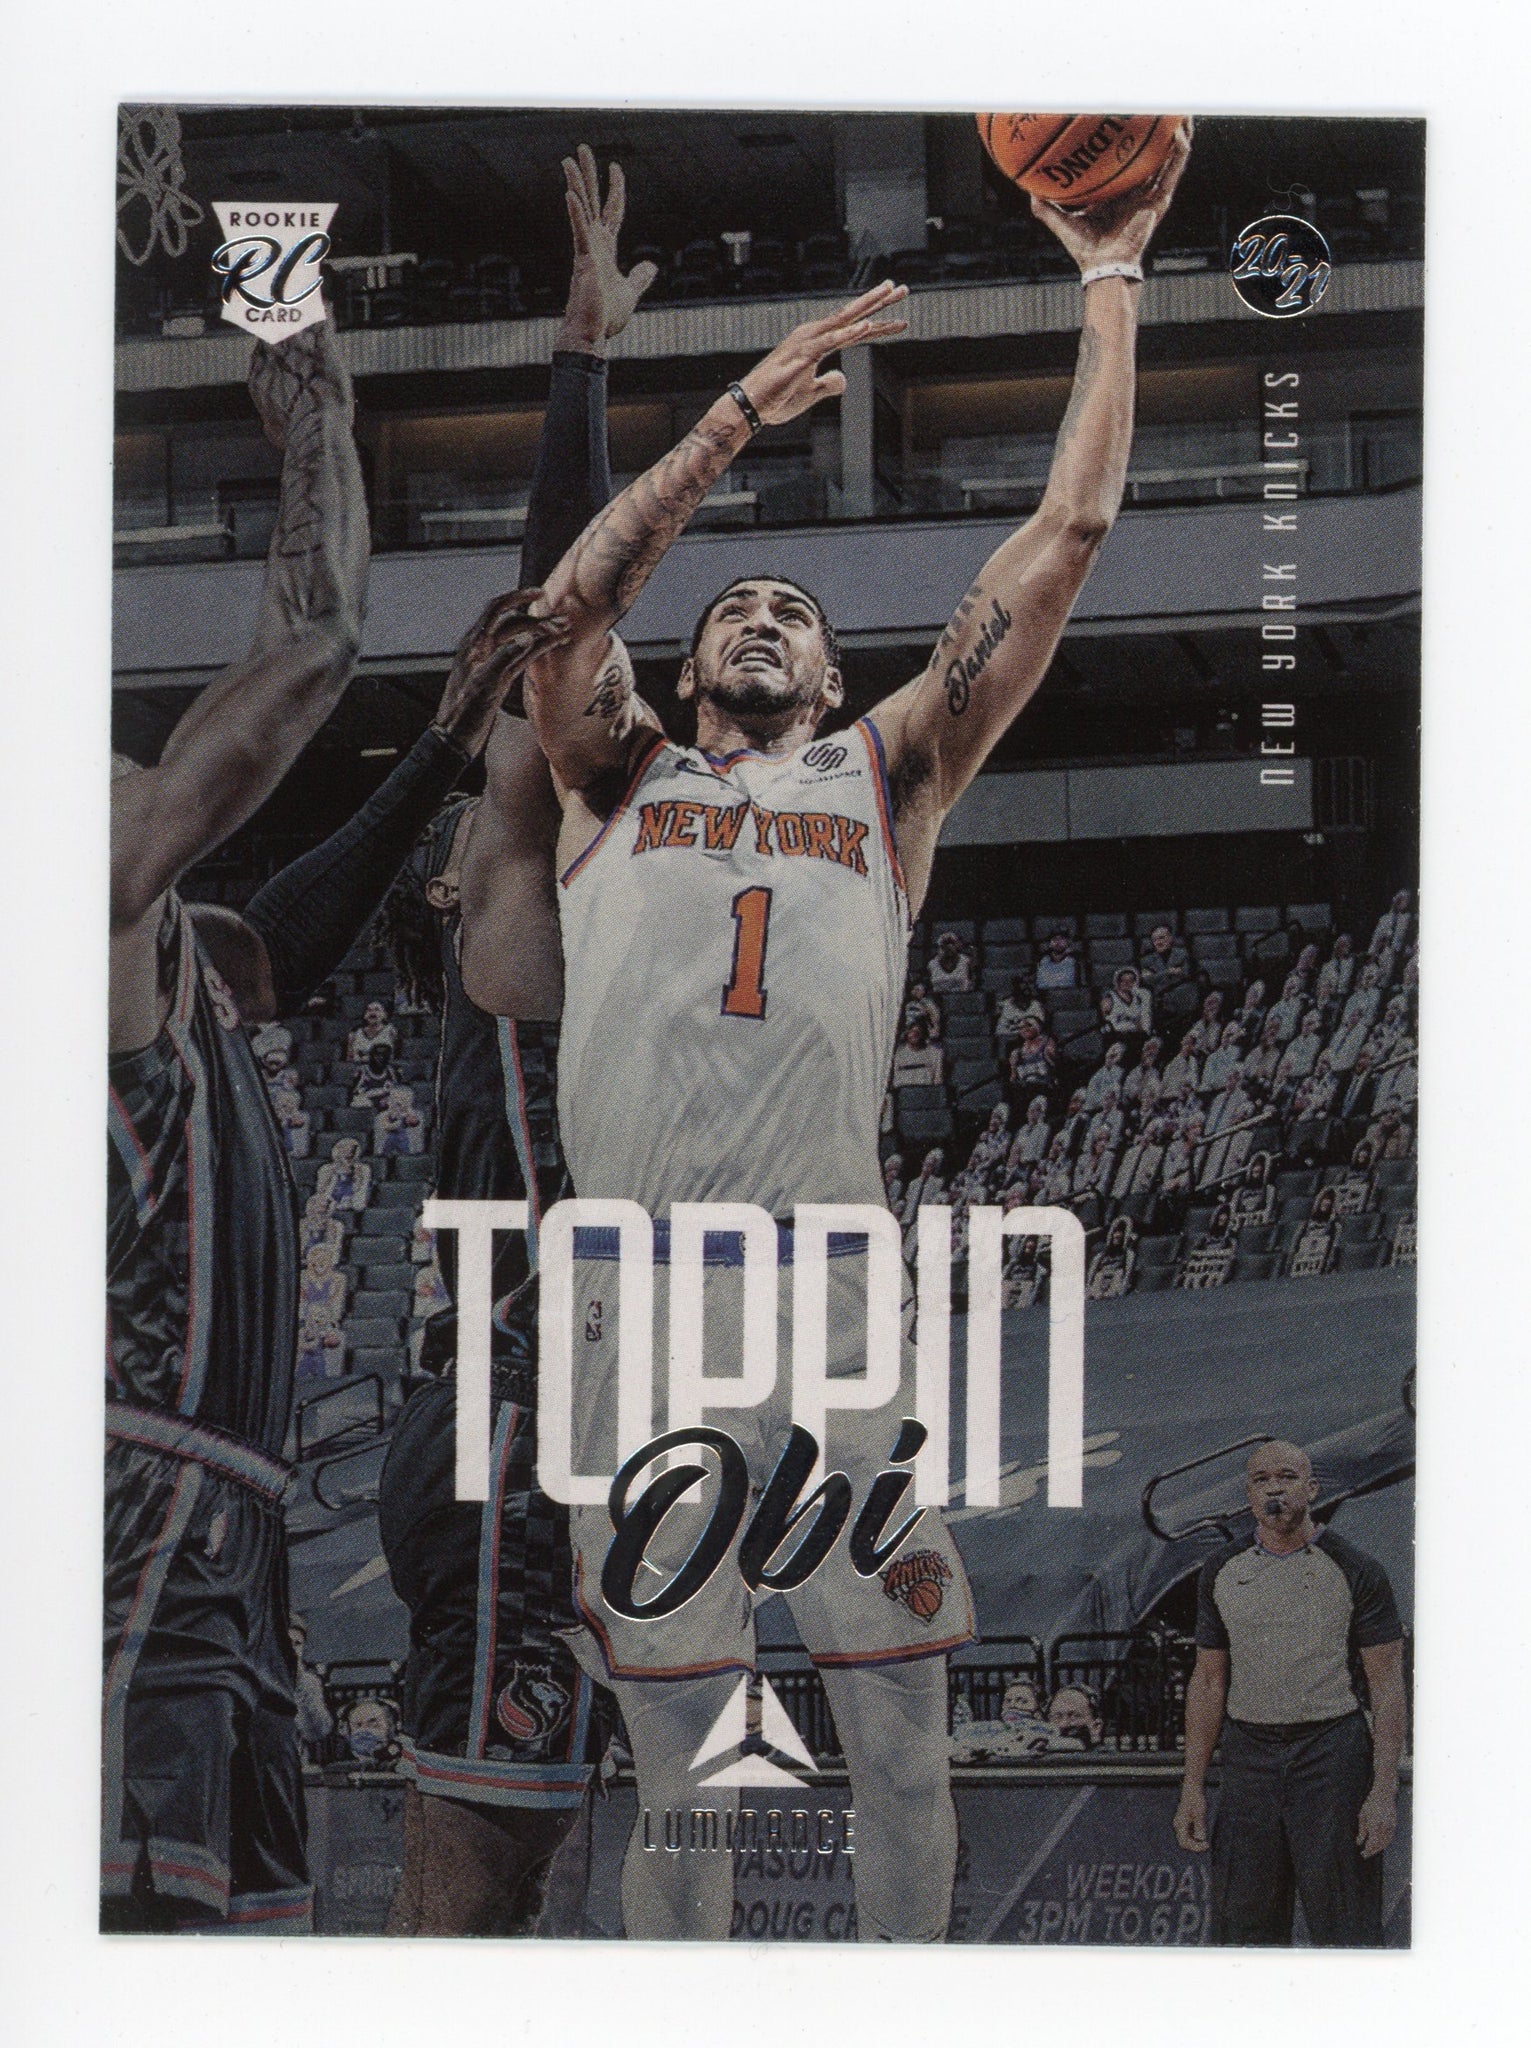 2020-2021 Obi Toppin Rookie Luminance Panini New York Knicks # 159